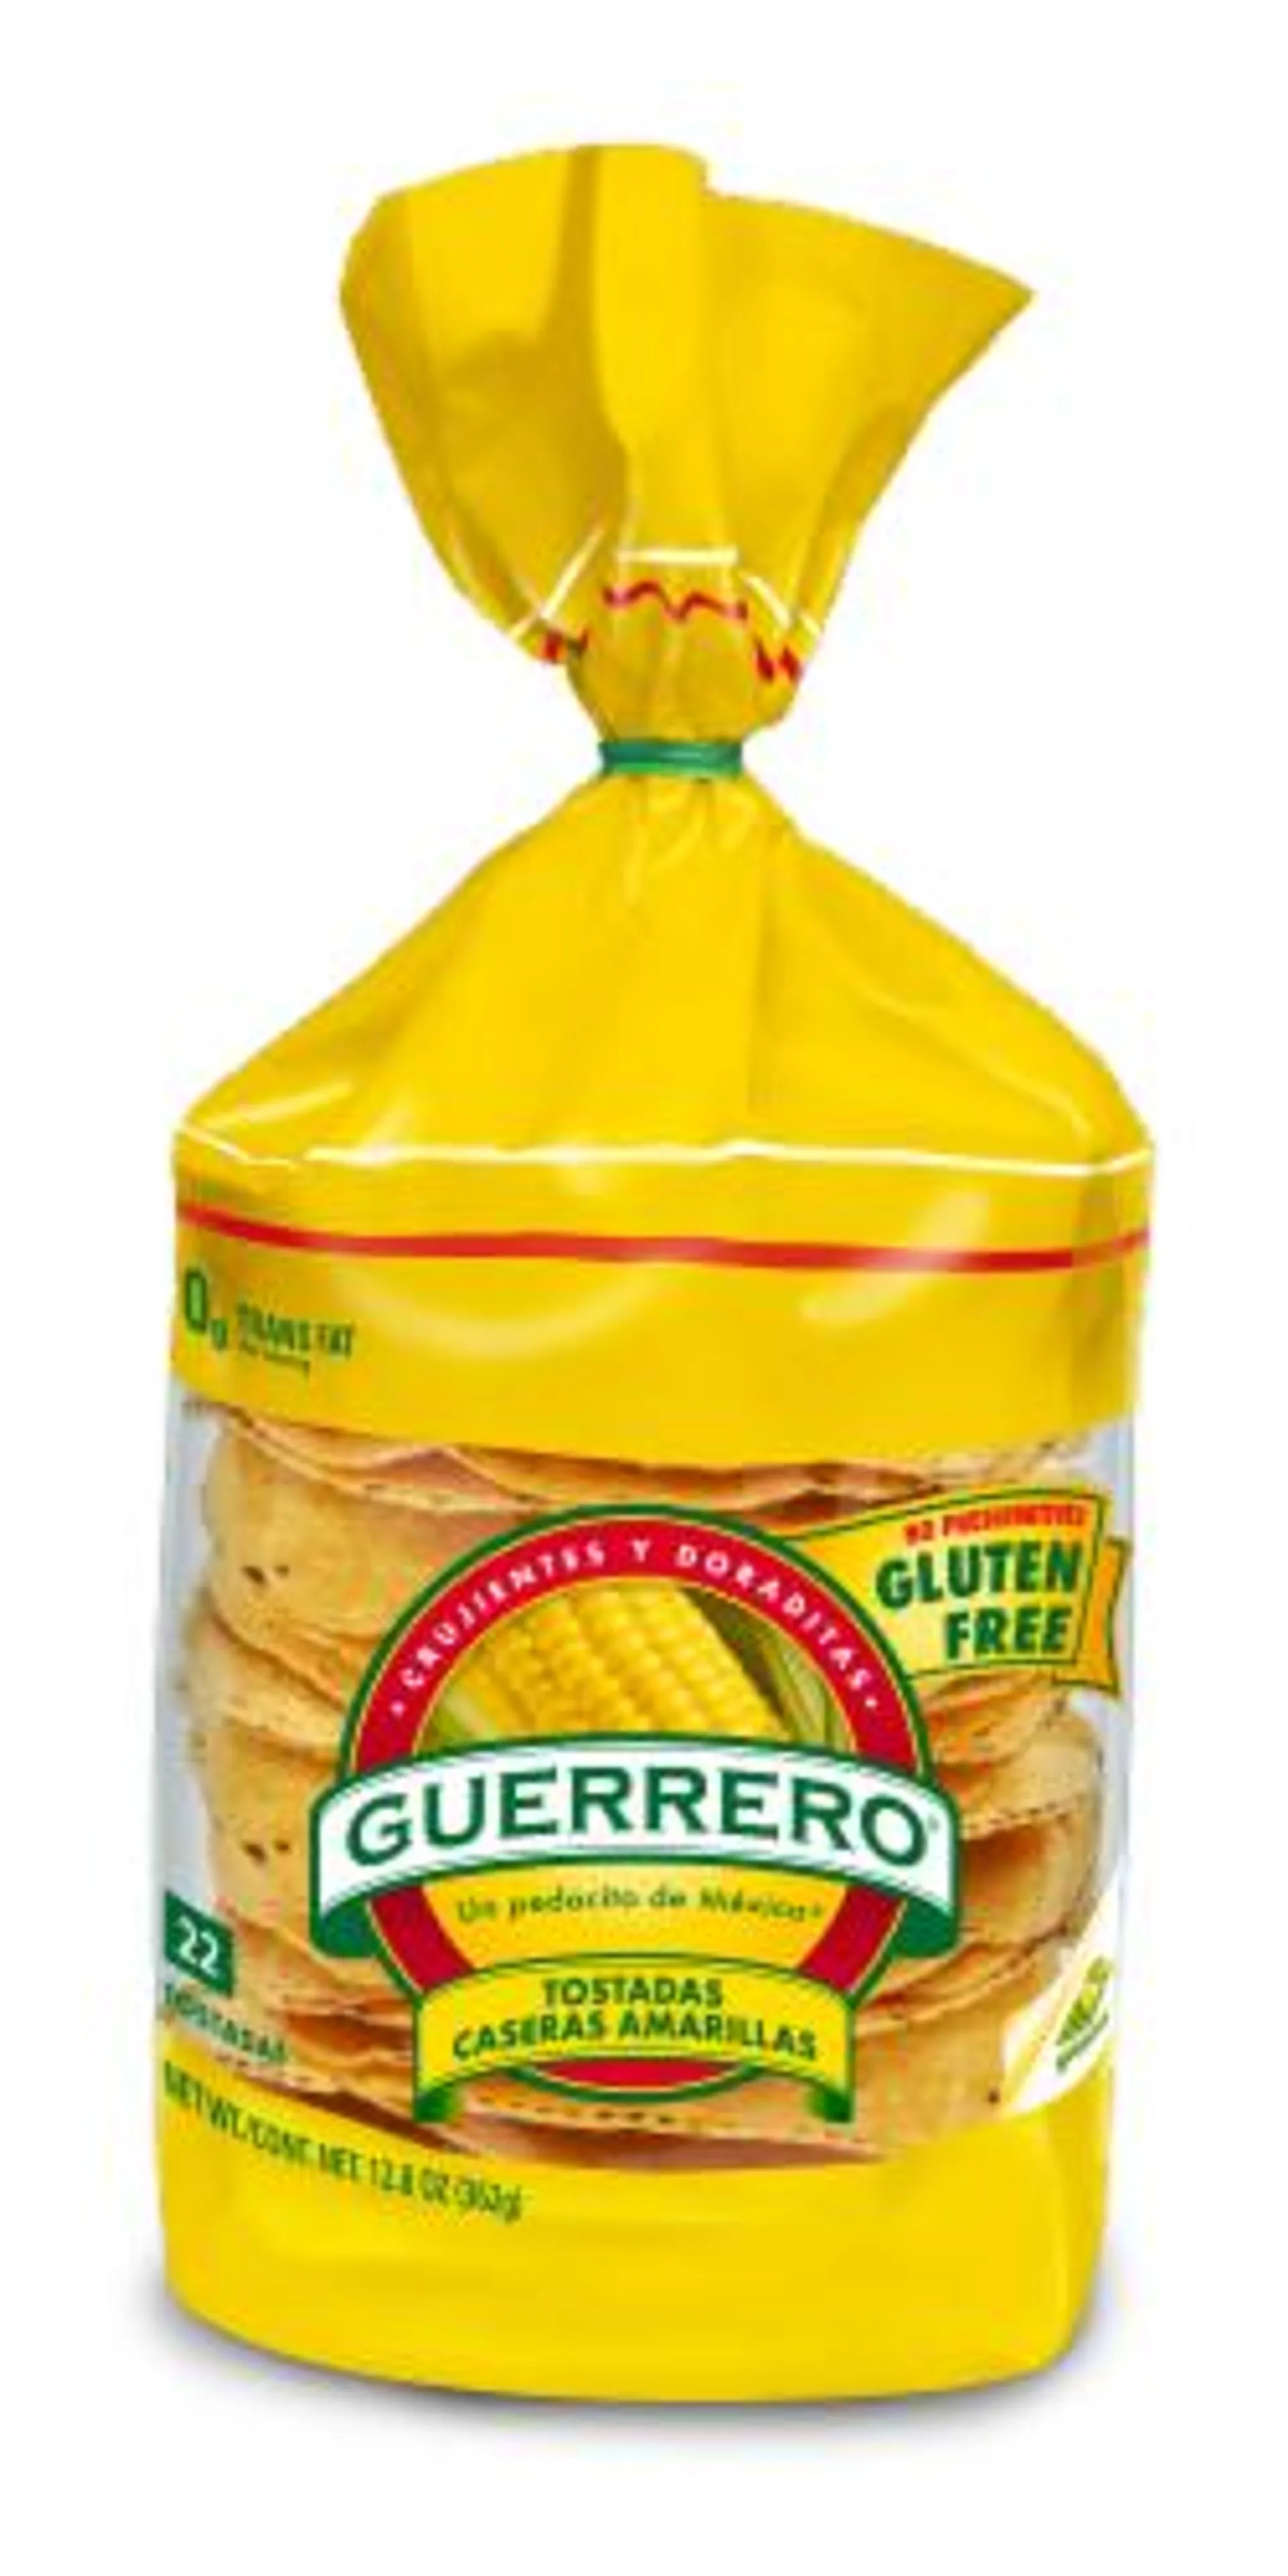 Guerrero Tostadas Caseras Amarillas